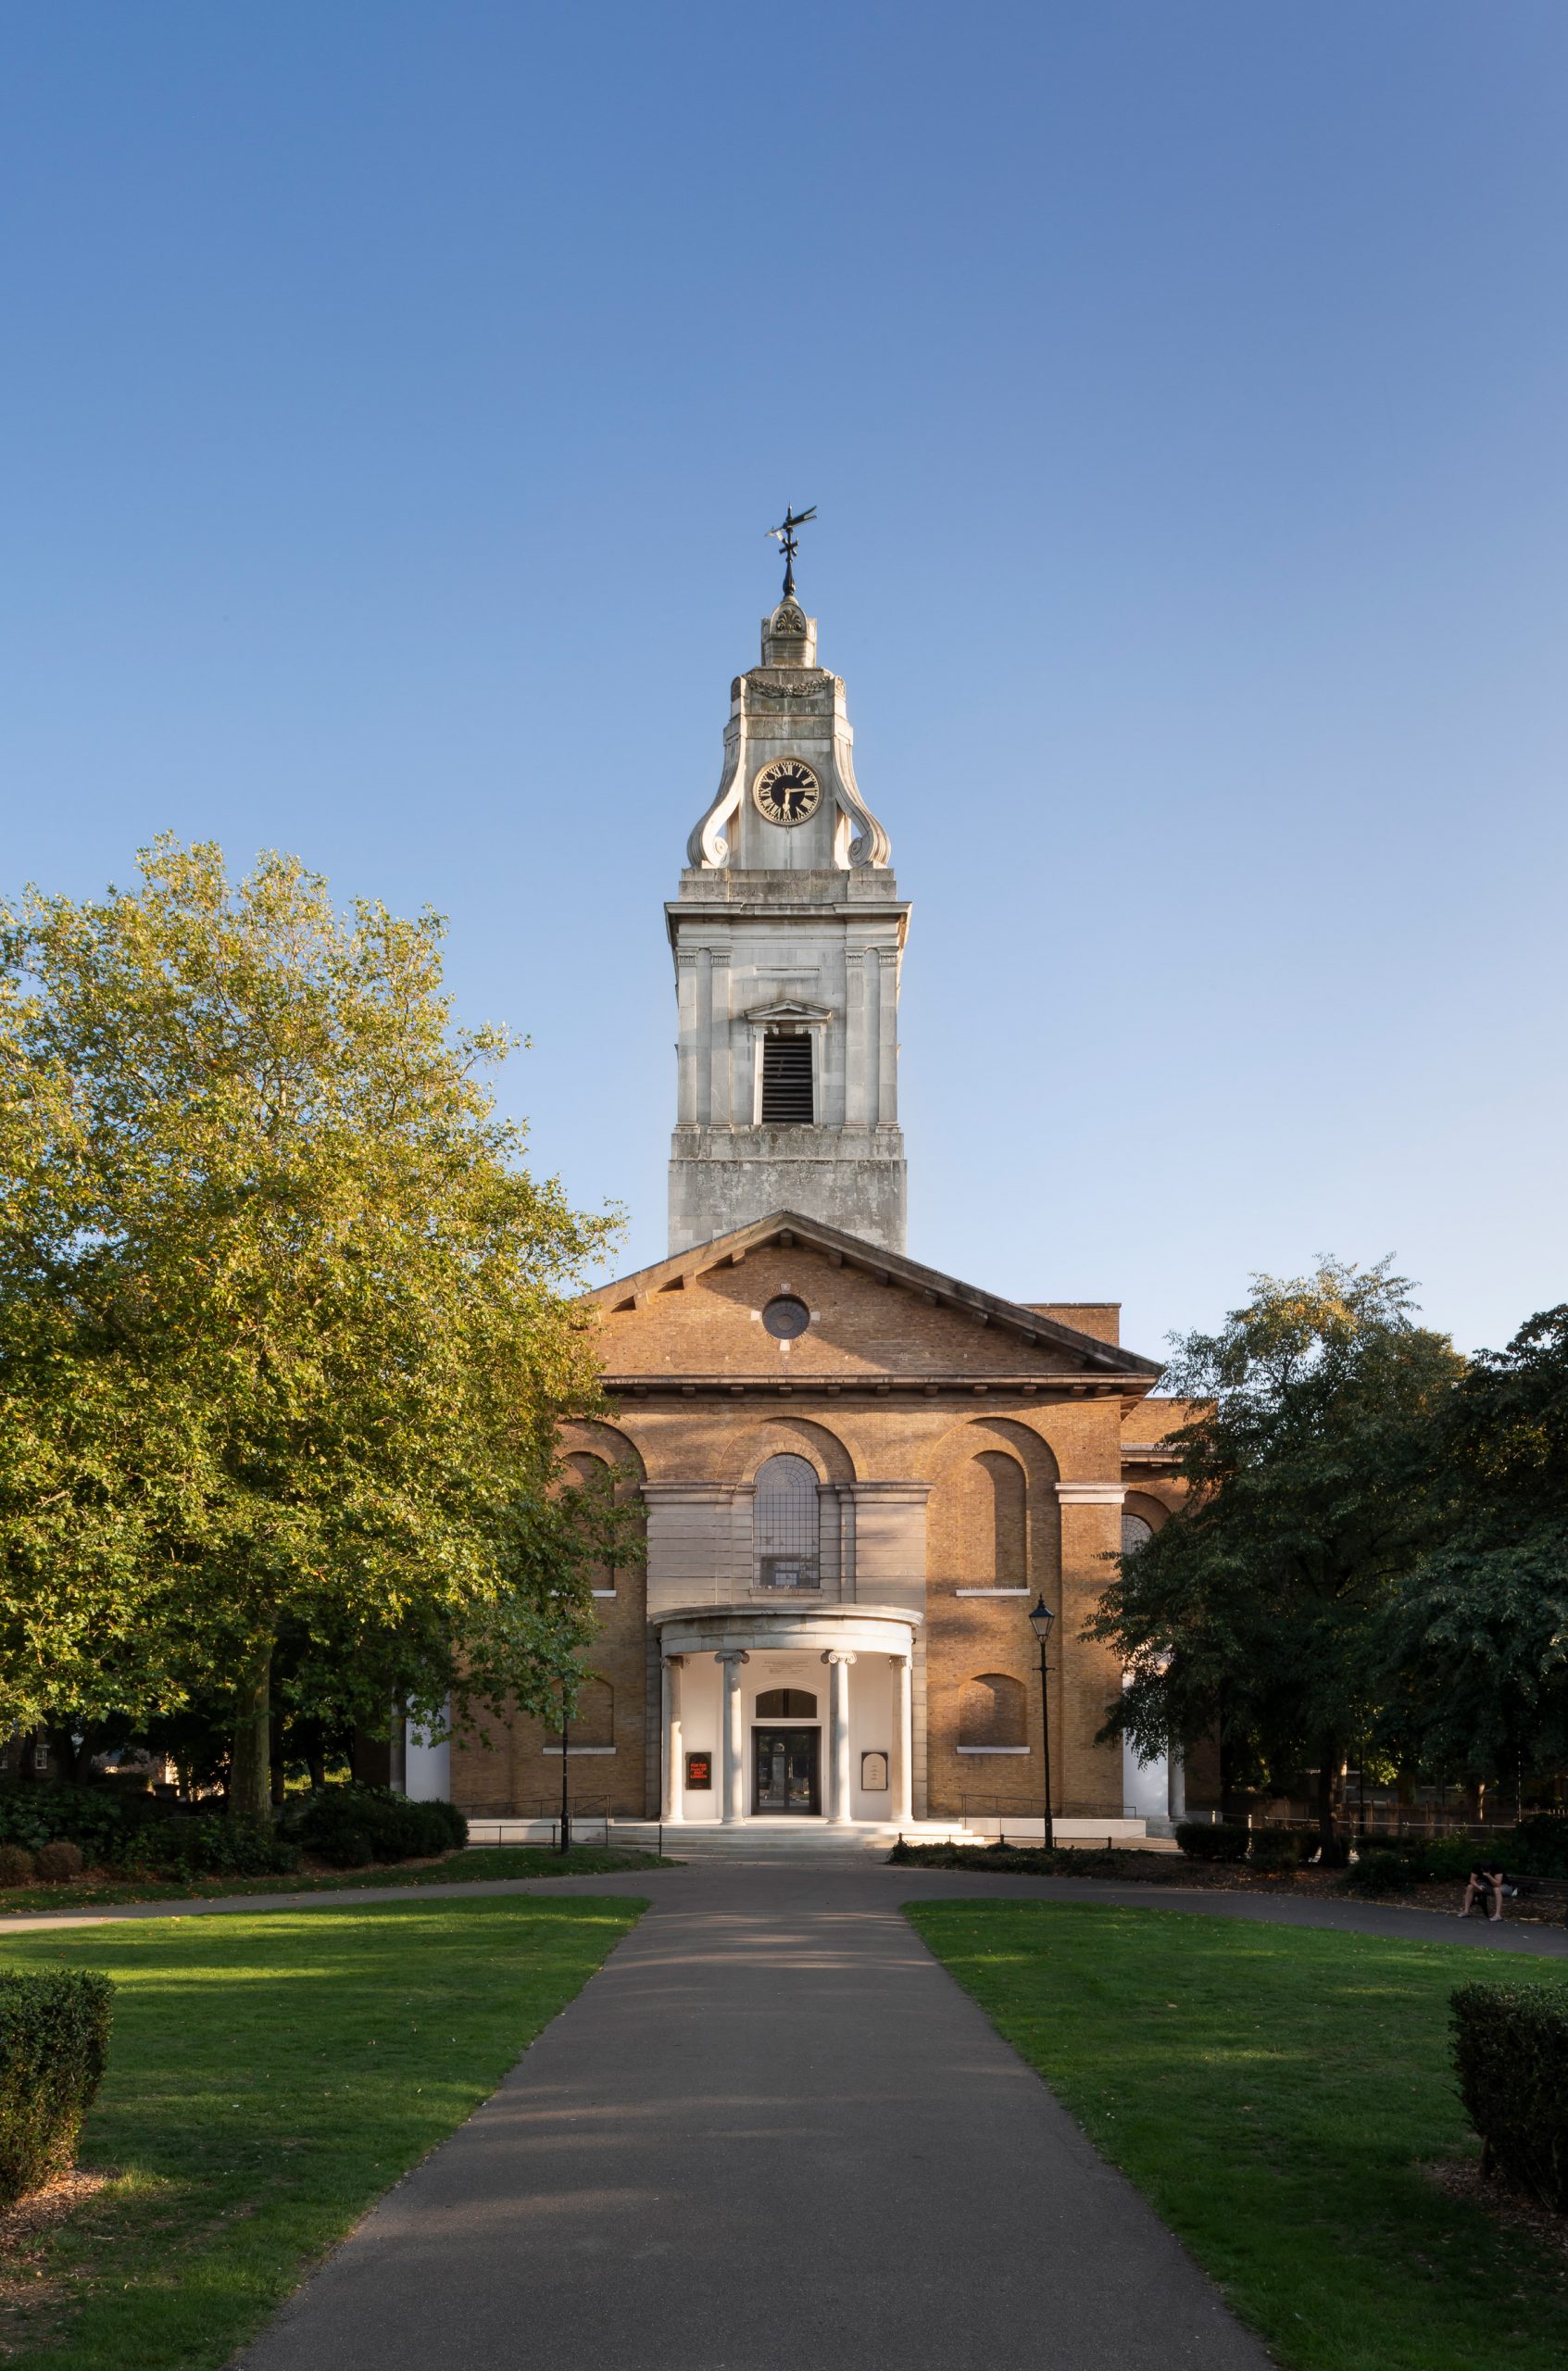 The refurbished St John at Hackney by John Pawson and Thomas Ford & Partners